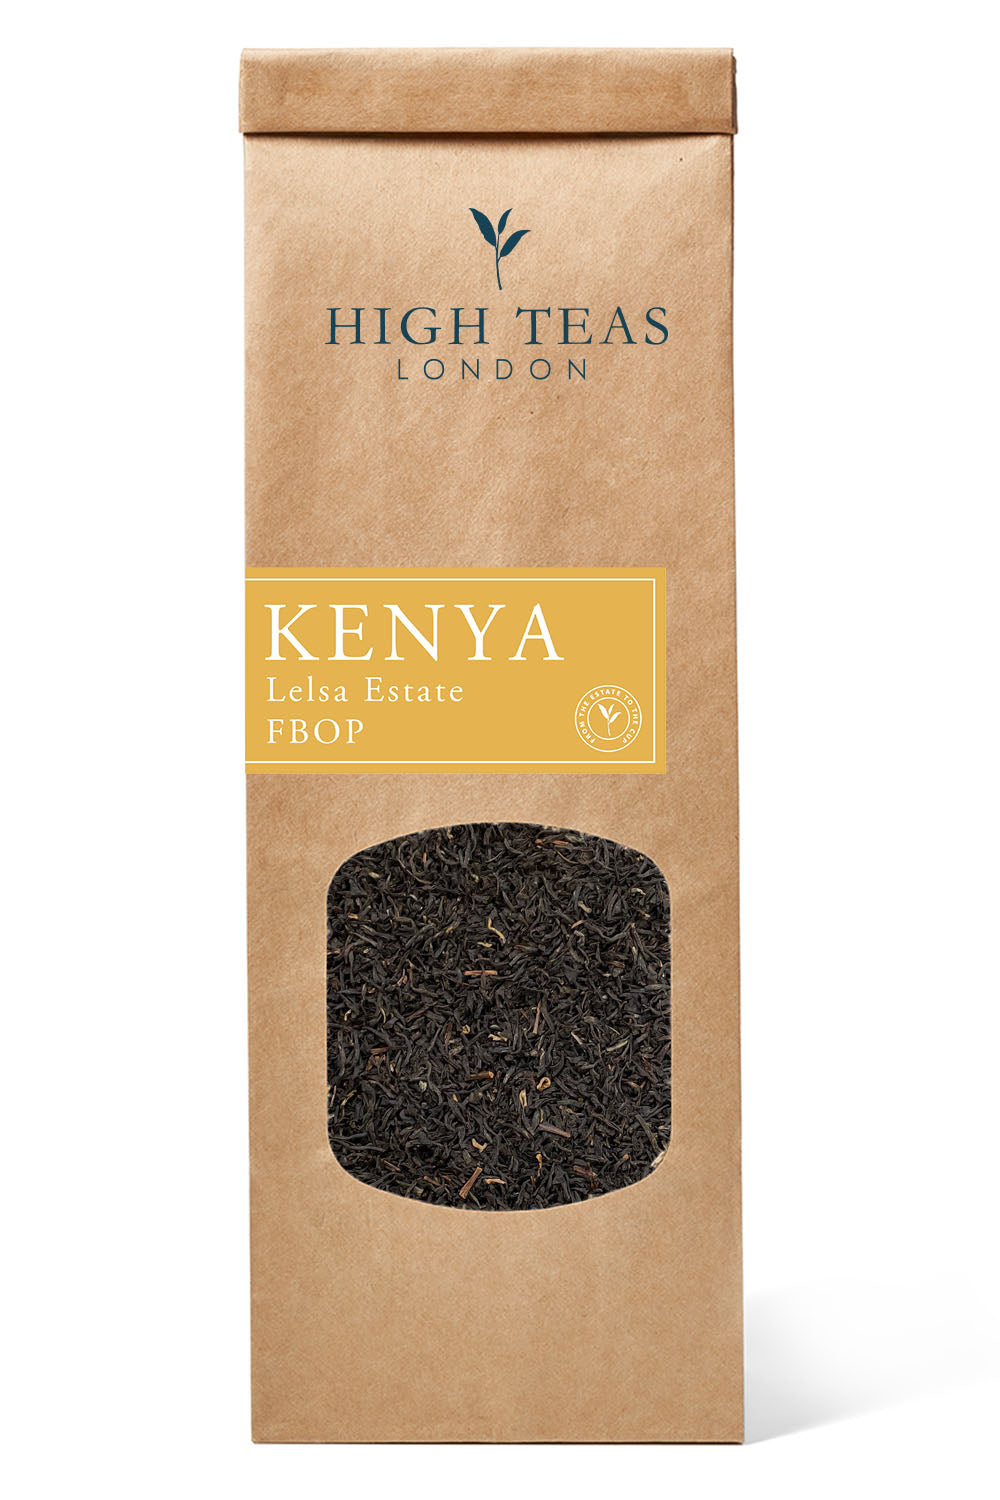 Kenya - Lelsa Estate FBOP-50g-Loose Leaf Tea-High Teas